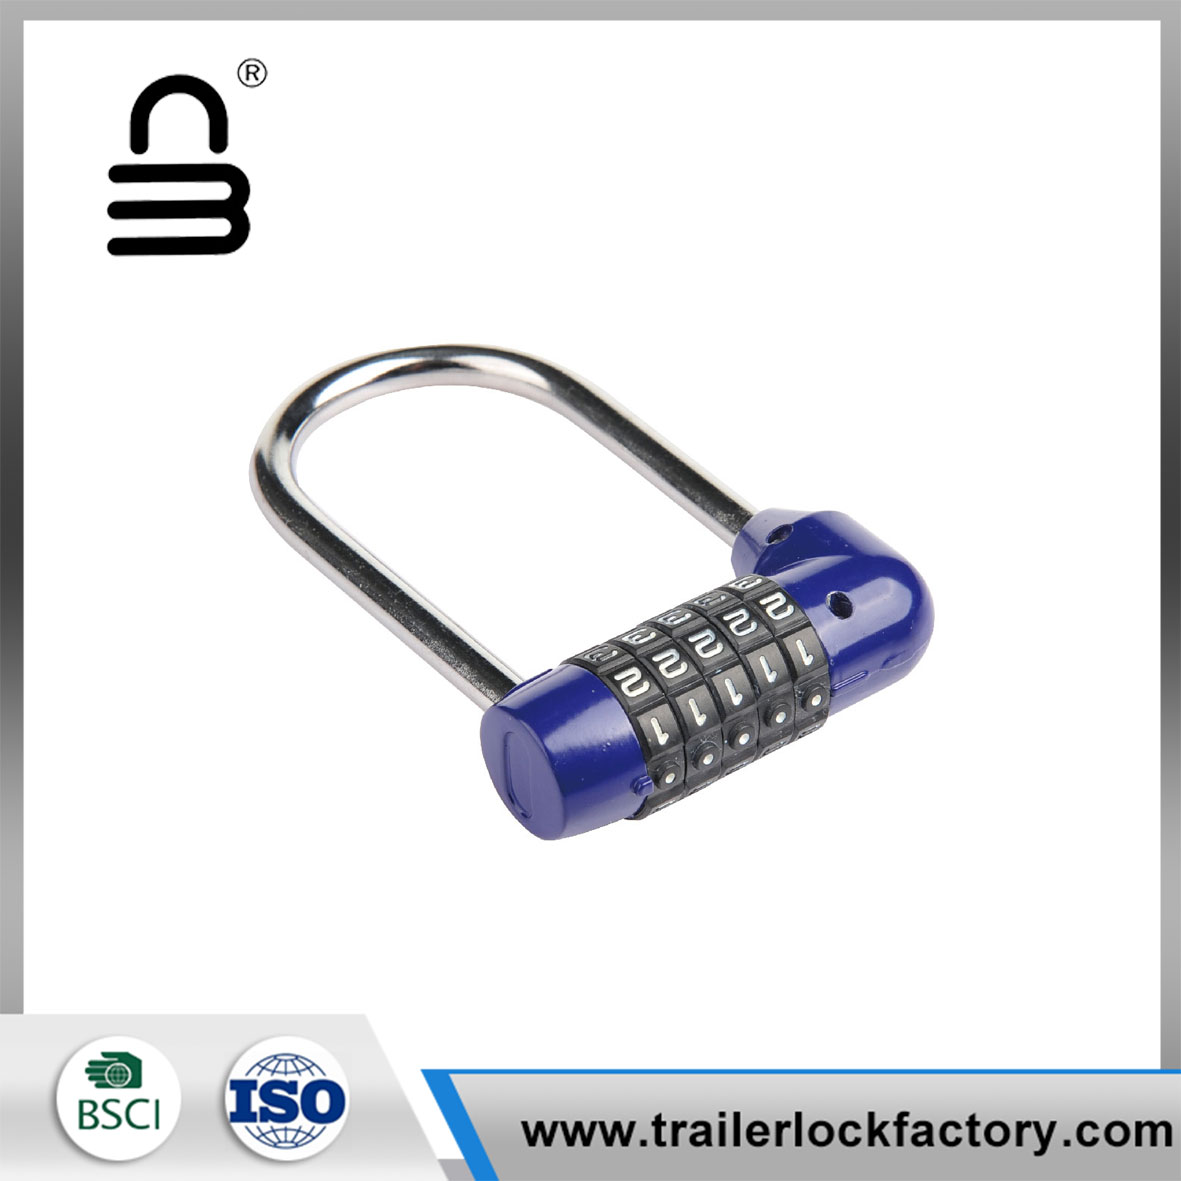 5 Digital Combination Lock Security Padlock